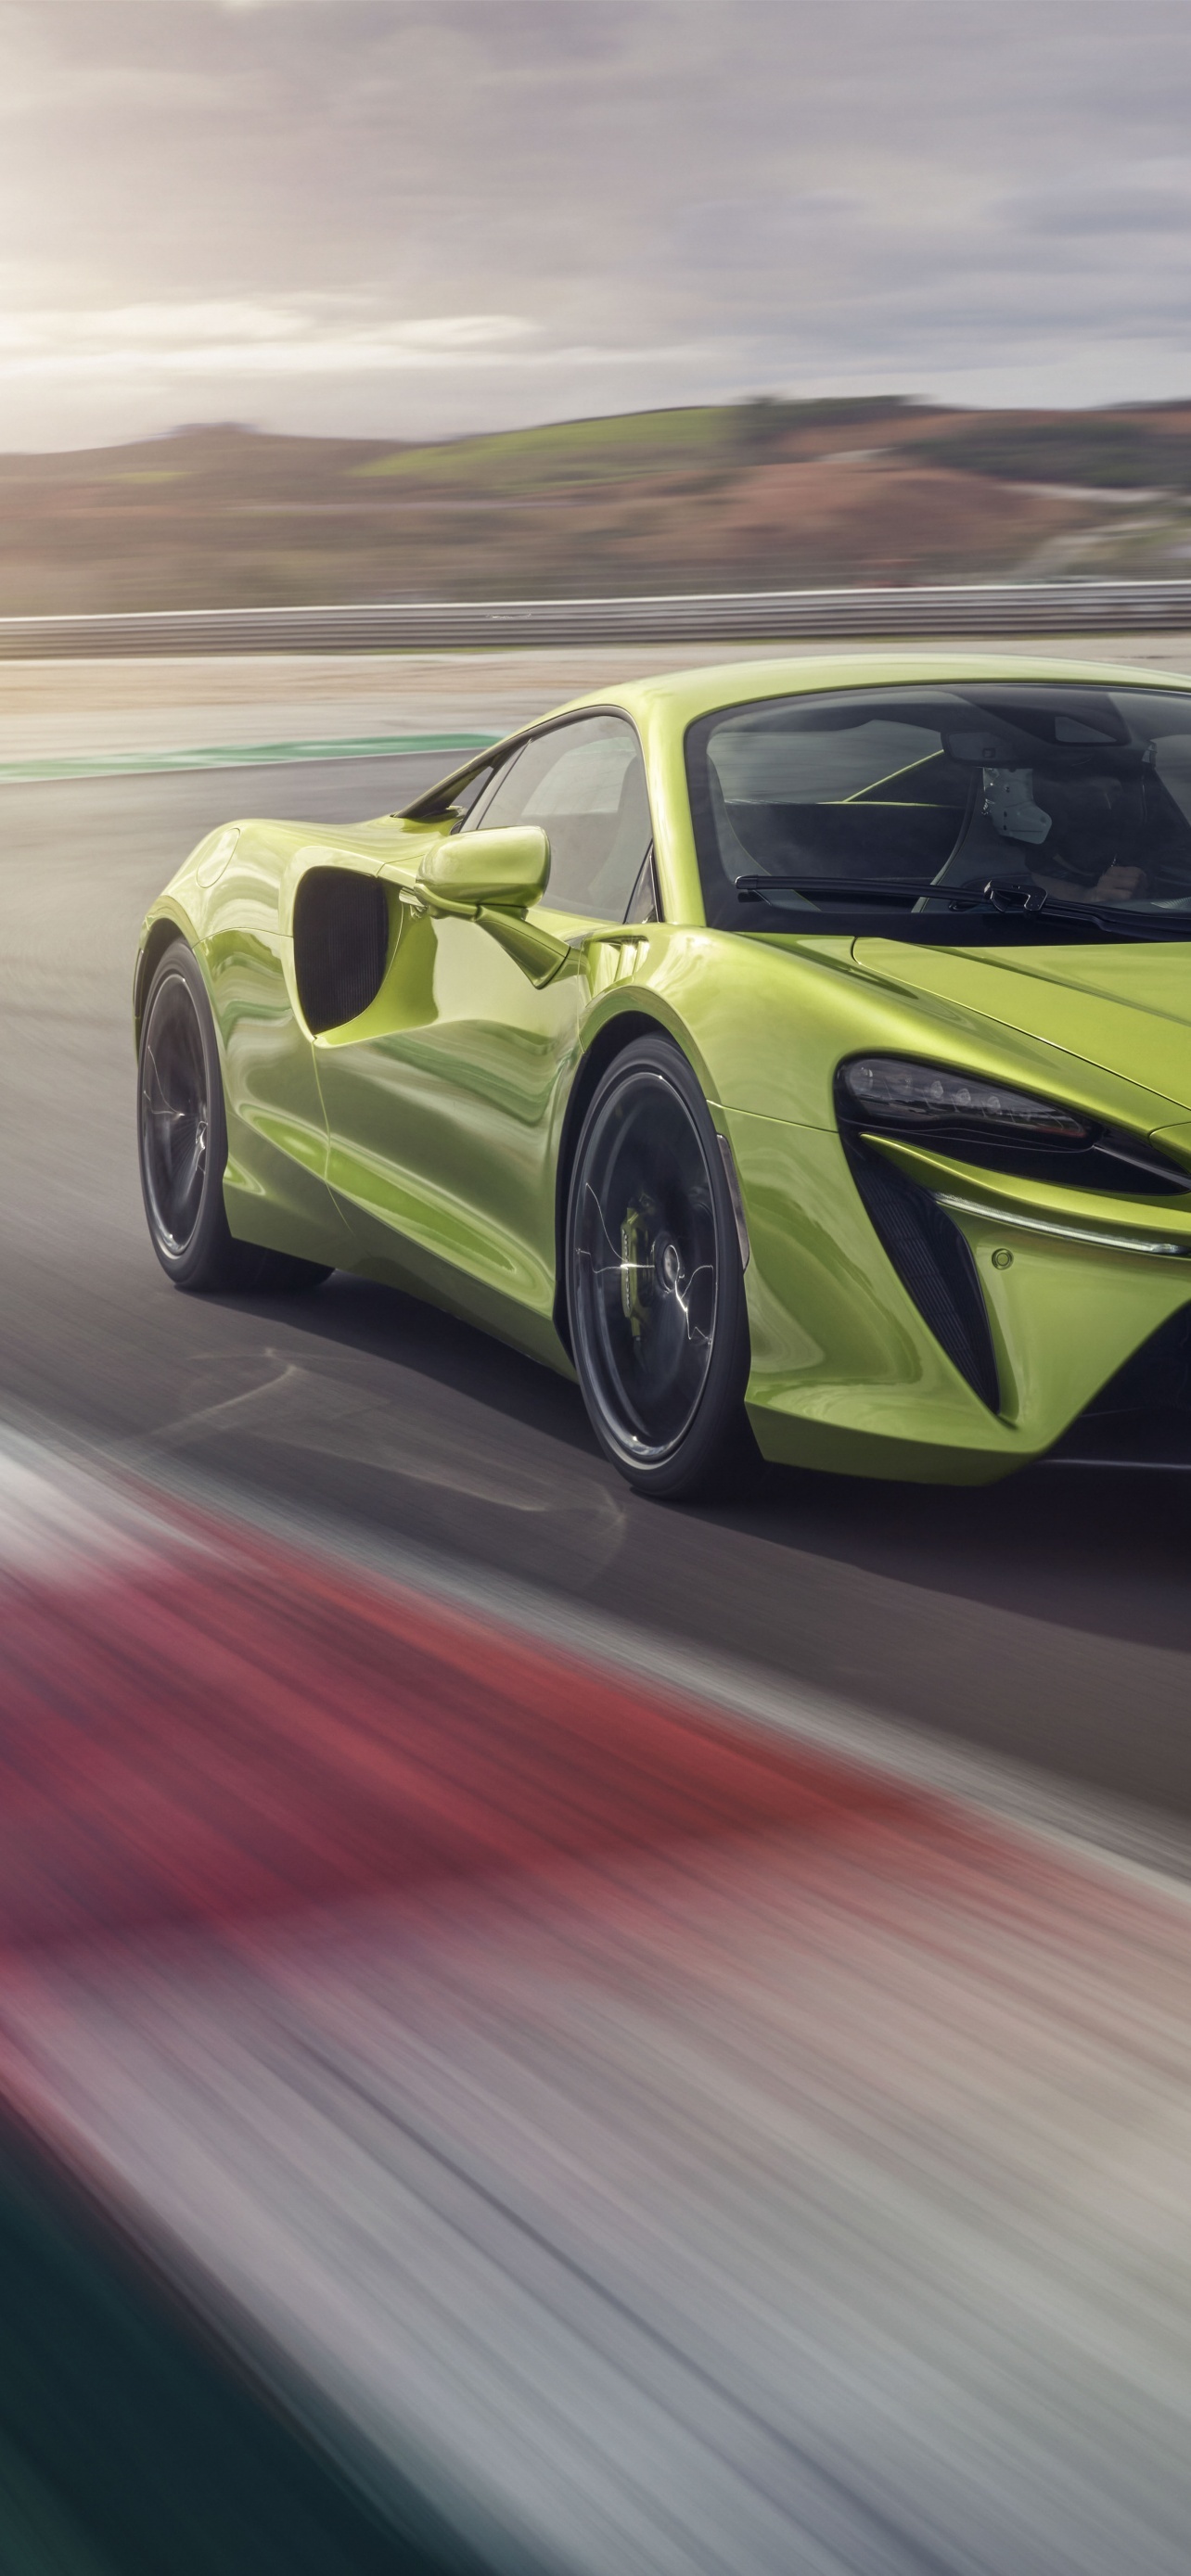 McLaren Artura, Race track sports cars, 2021 model, High-resolution wallpapers, 1290x2780 HD Handy